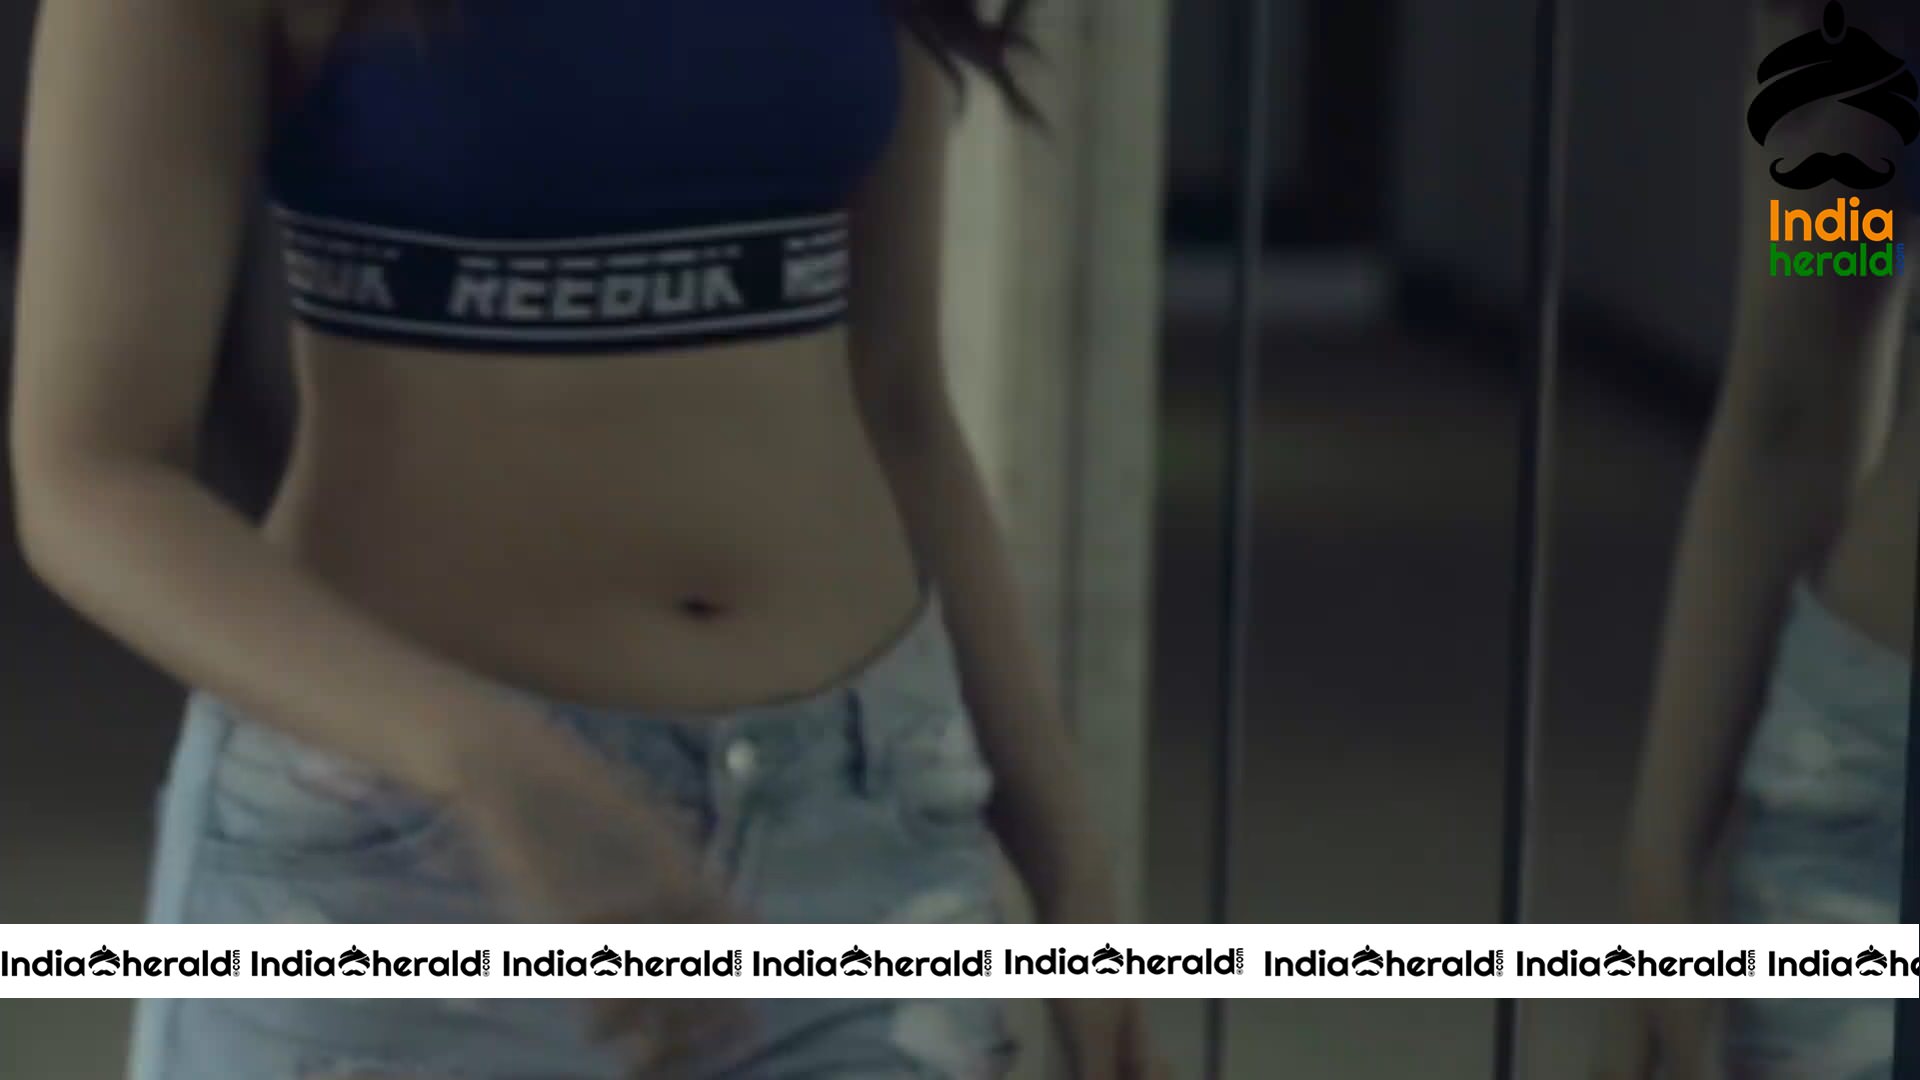 India Herald Exclusive Tamanna Unseen Hot Sexy Photoshoot Set 1